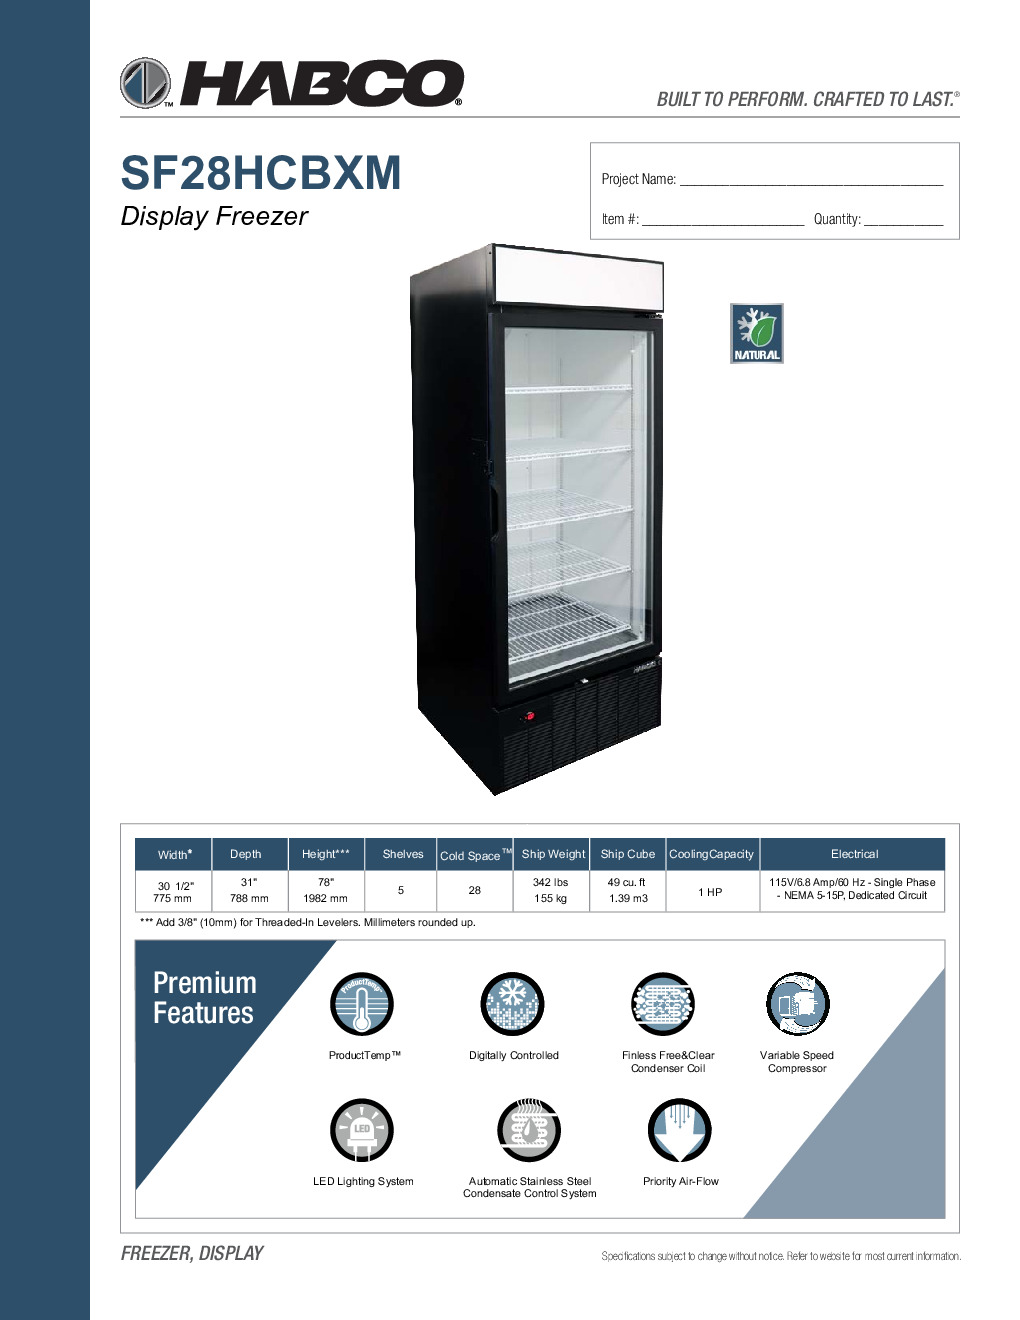 HABCO SF28HCBXM Merchandiser Freezer